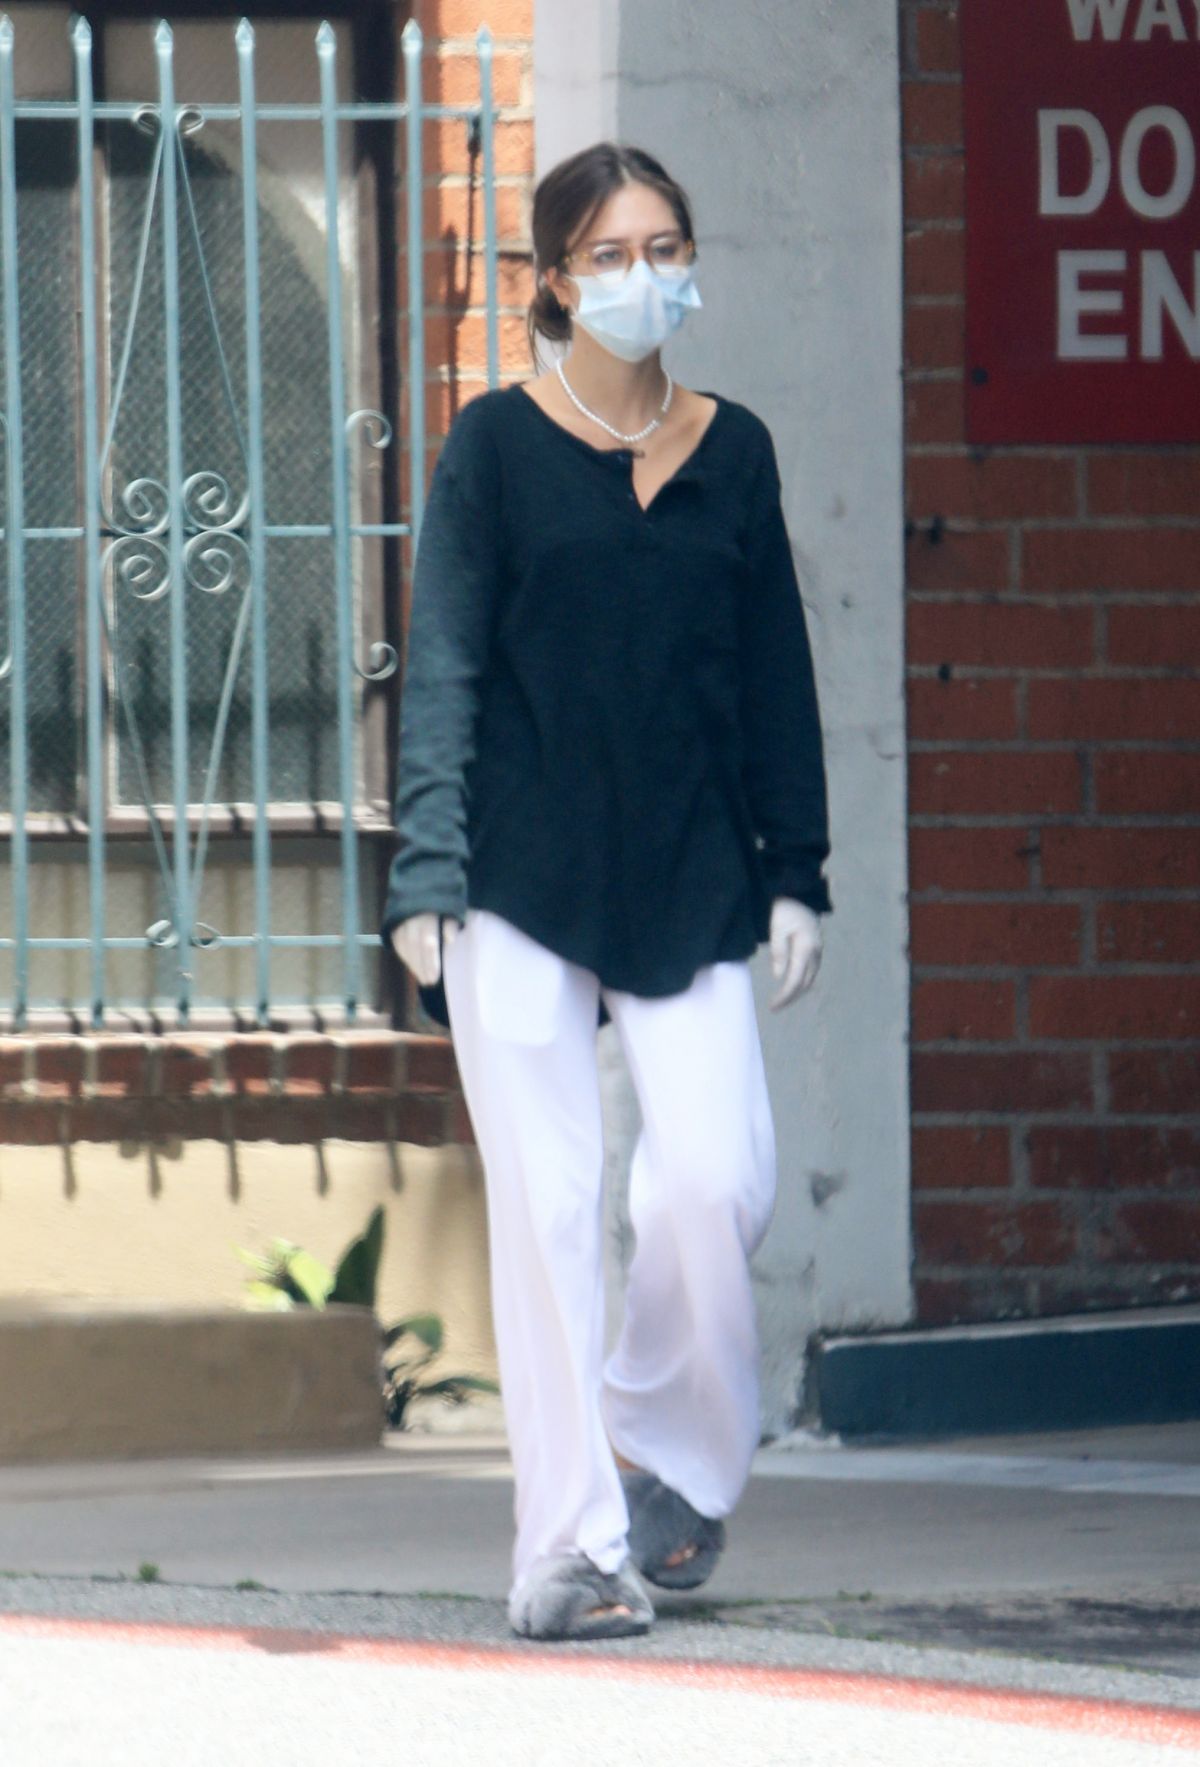 Delilah Belle Hamlin Wearing a Mask Out in Beverly Hills 2020/06/01